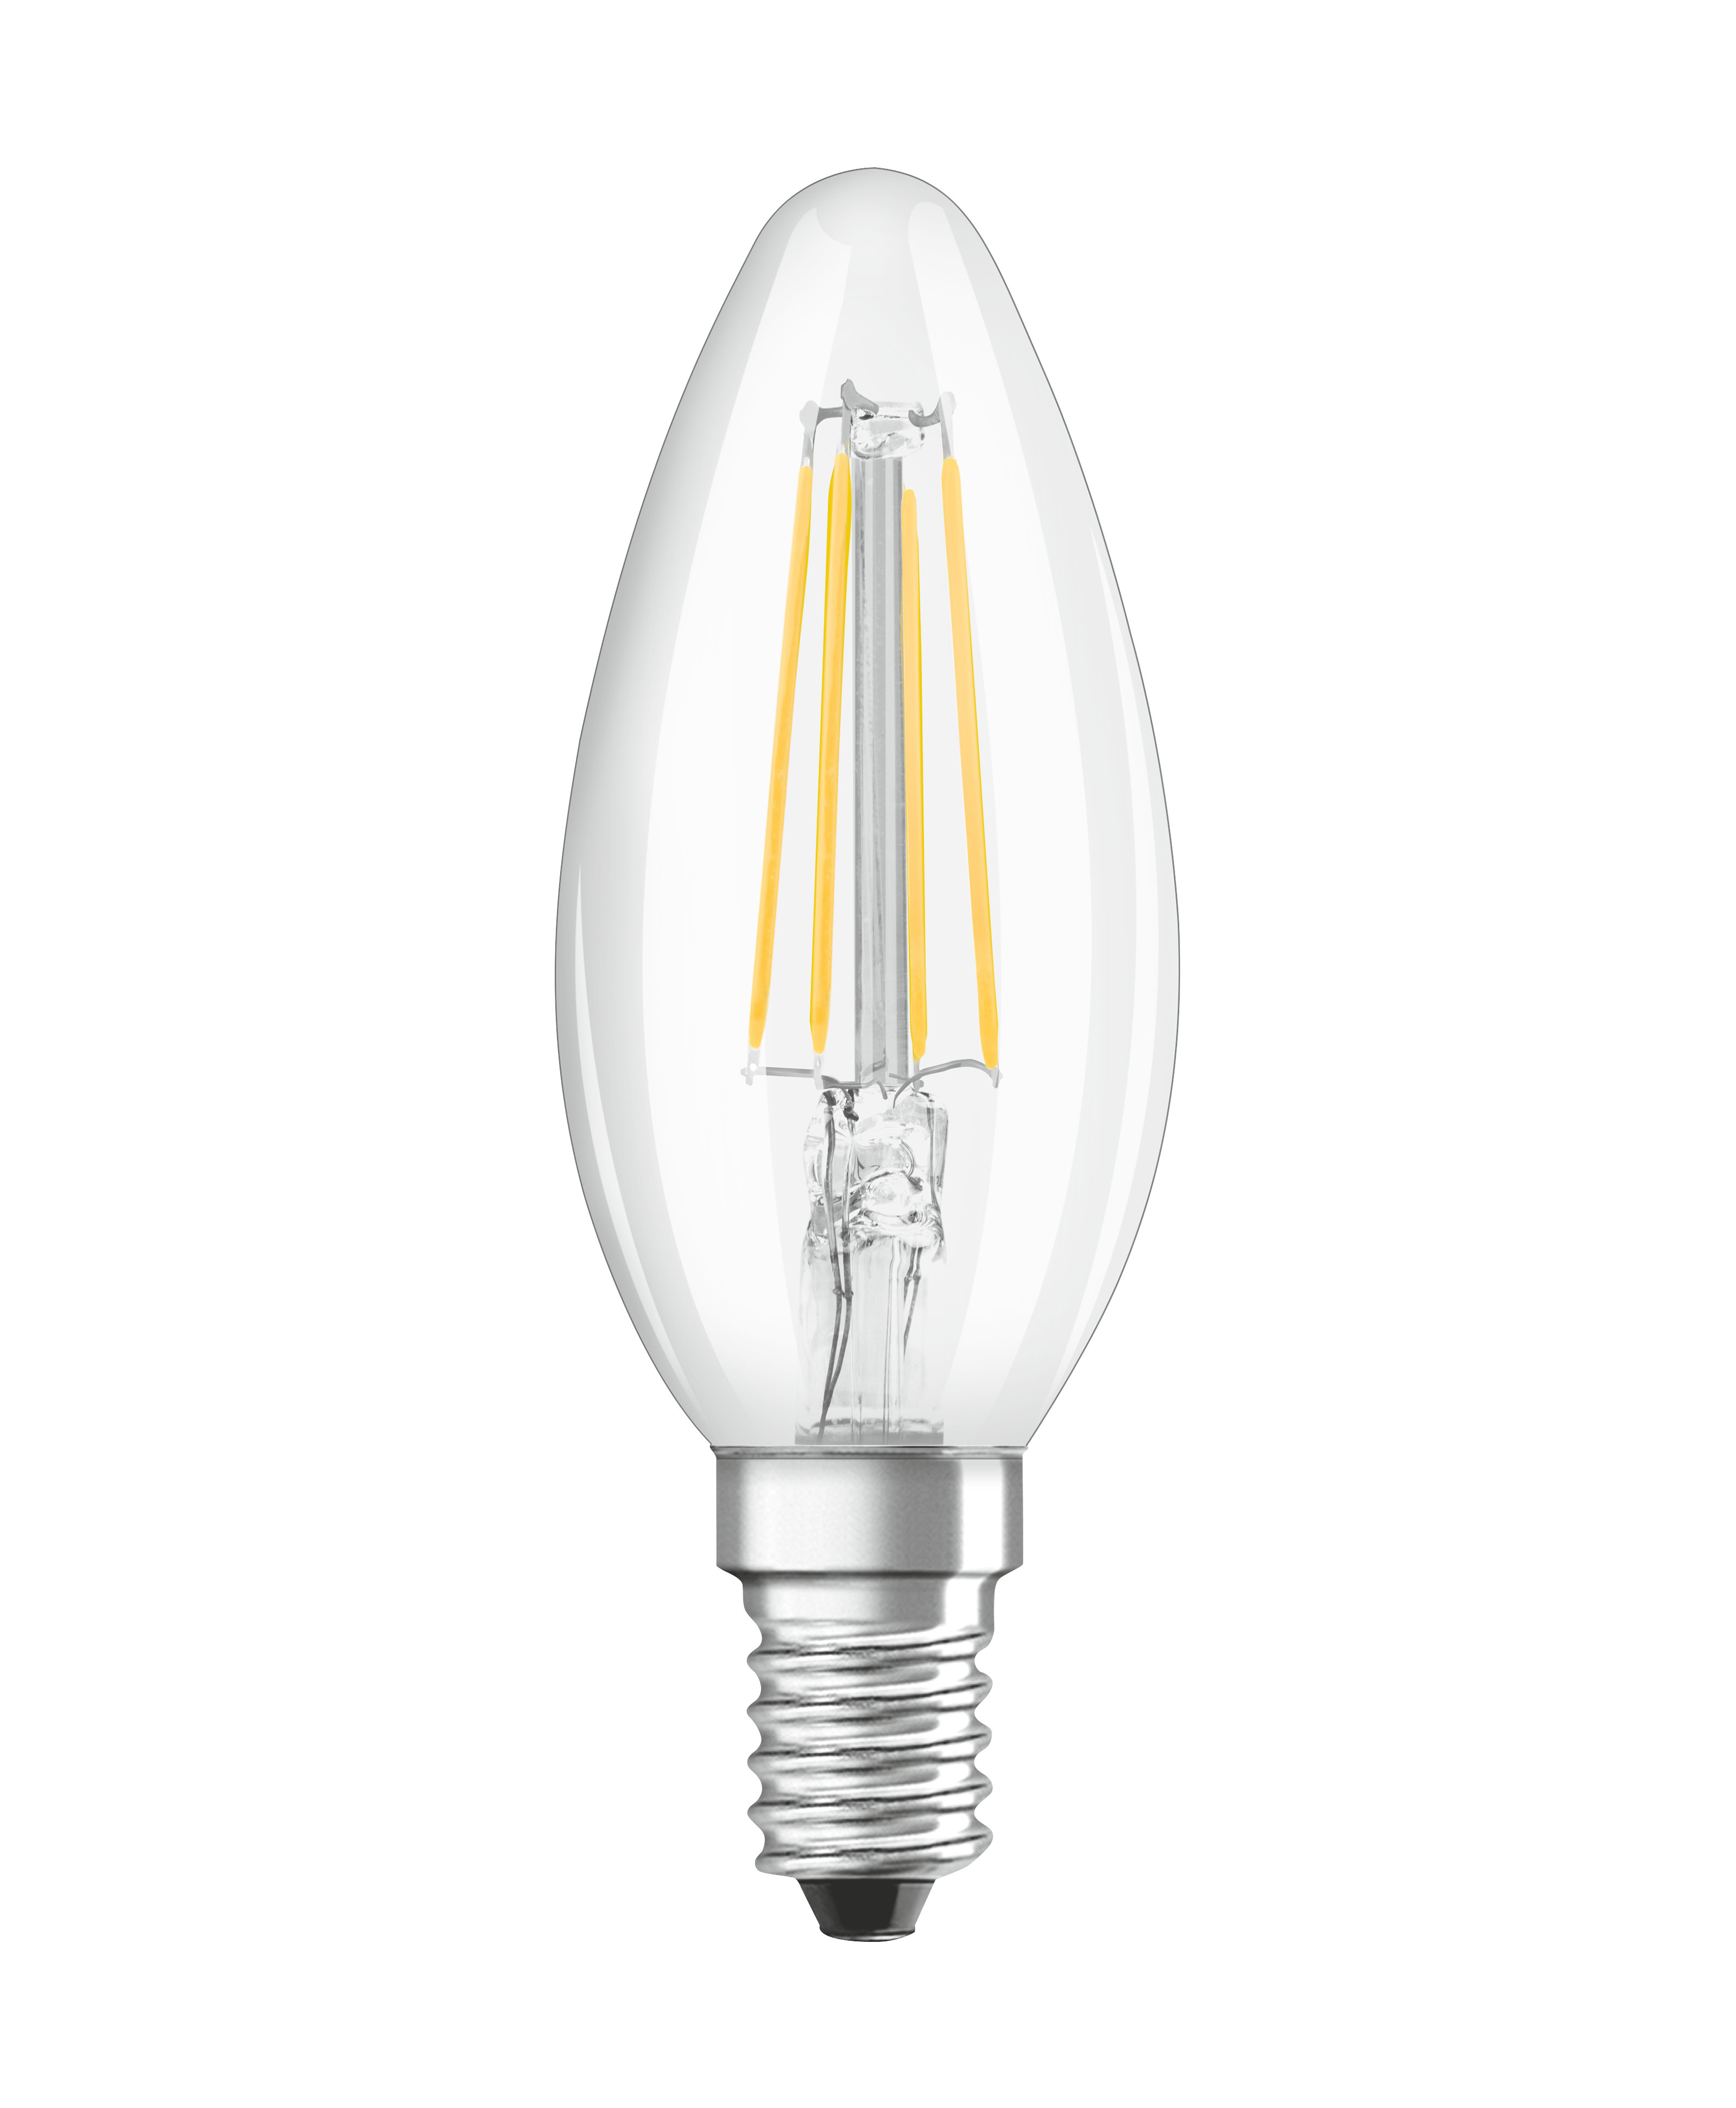 Lampe CLASSIC Retrofit B LED Warmweiß OSRAM  LED Lumen 806